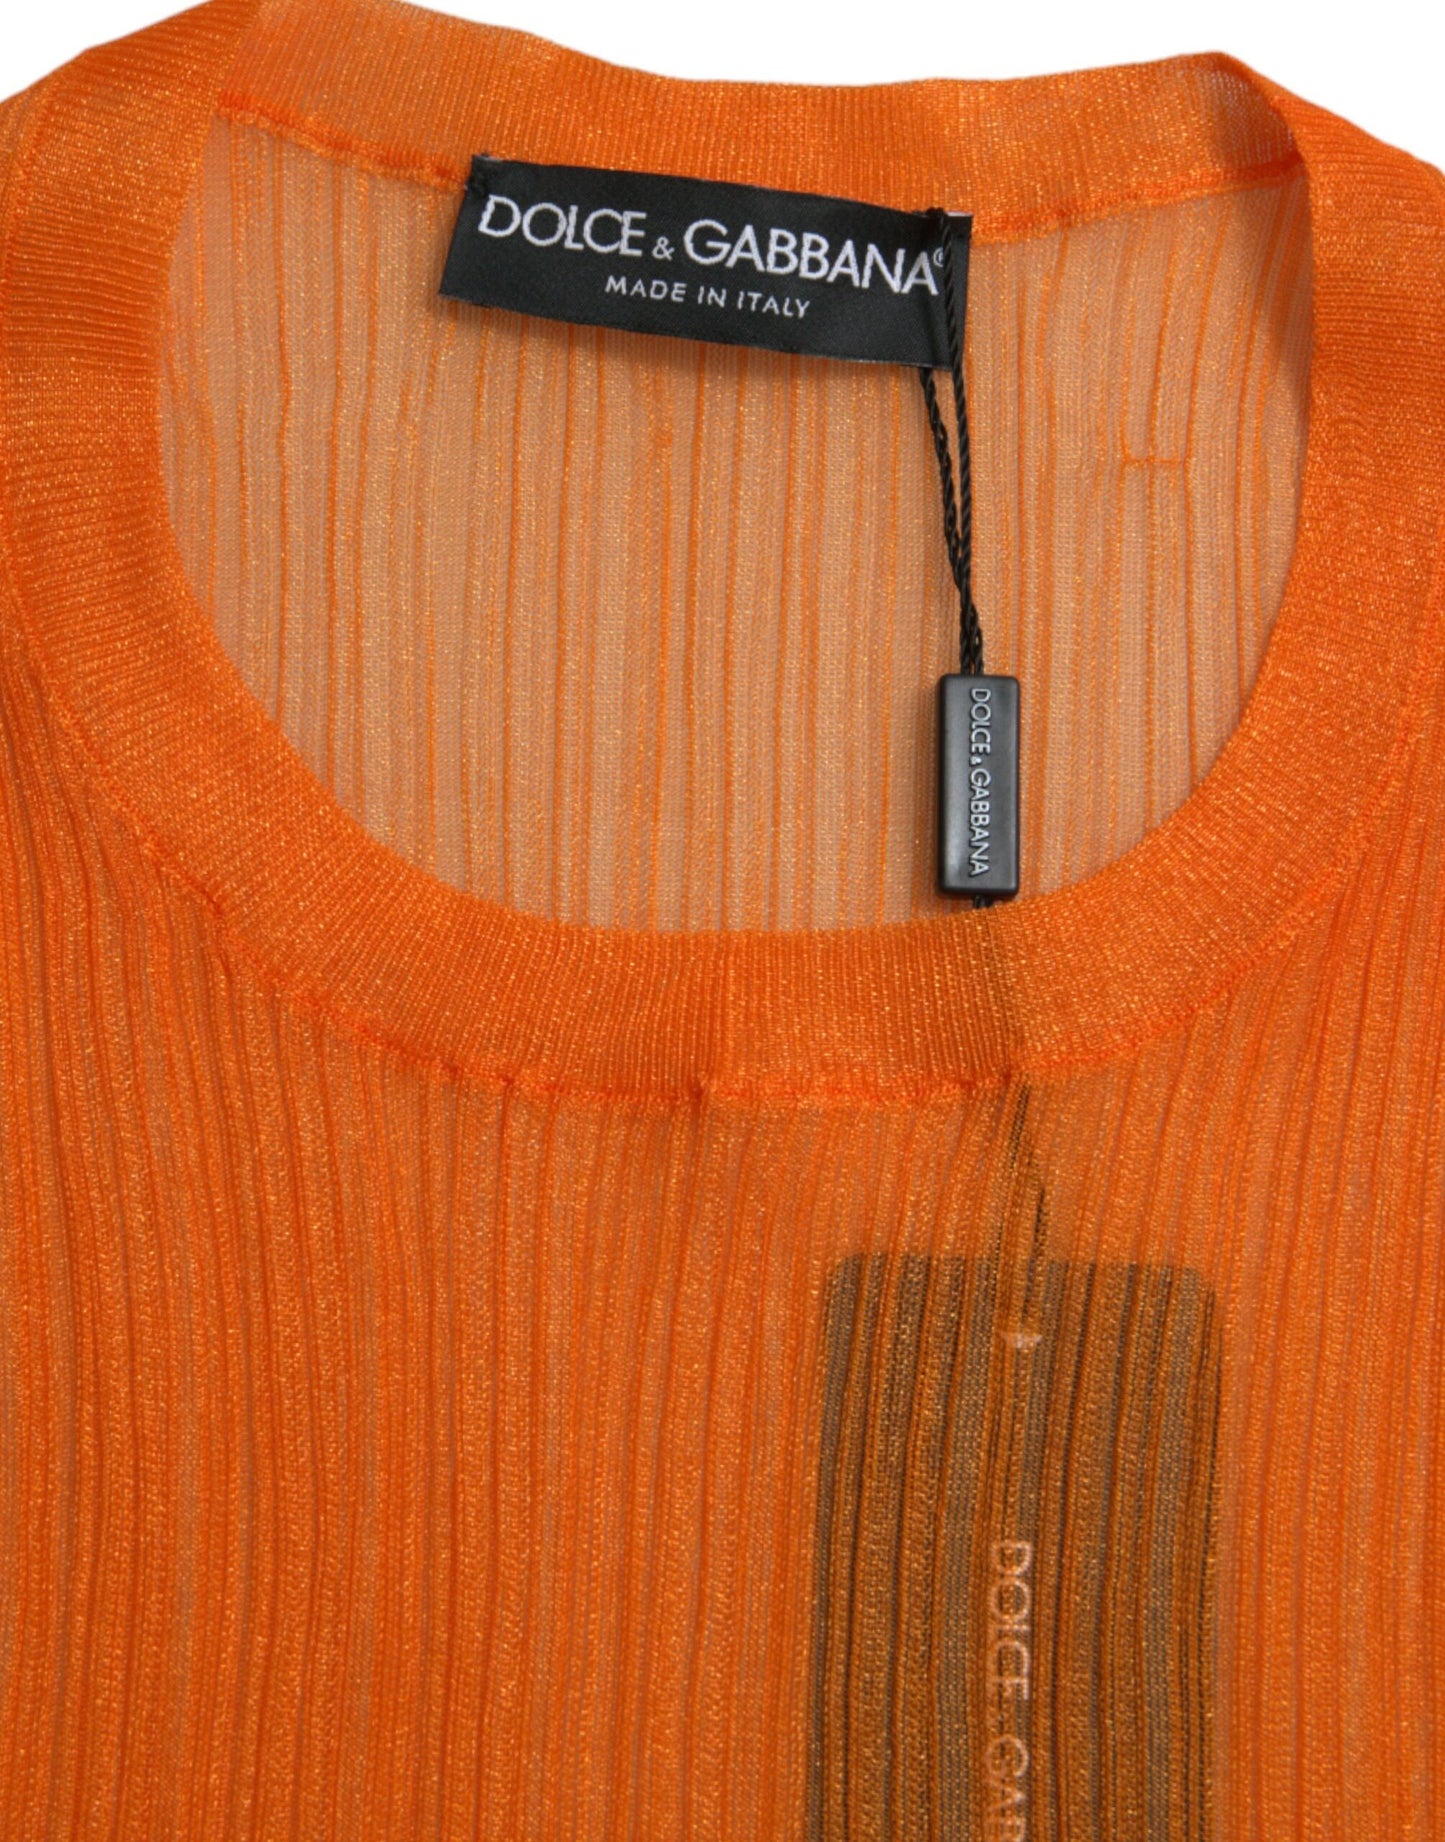 Dolce & Gabbana Chic Orange Crew Neck Tank Top